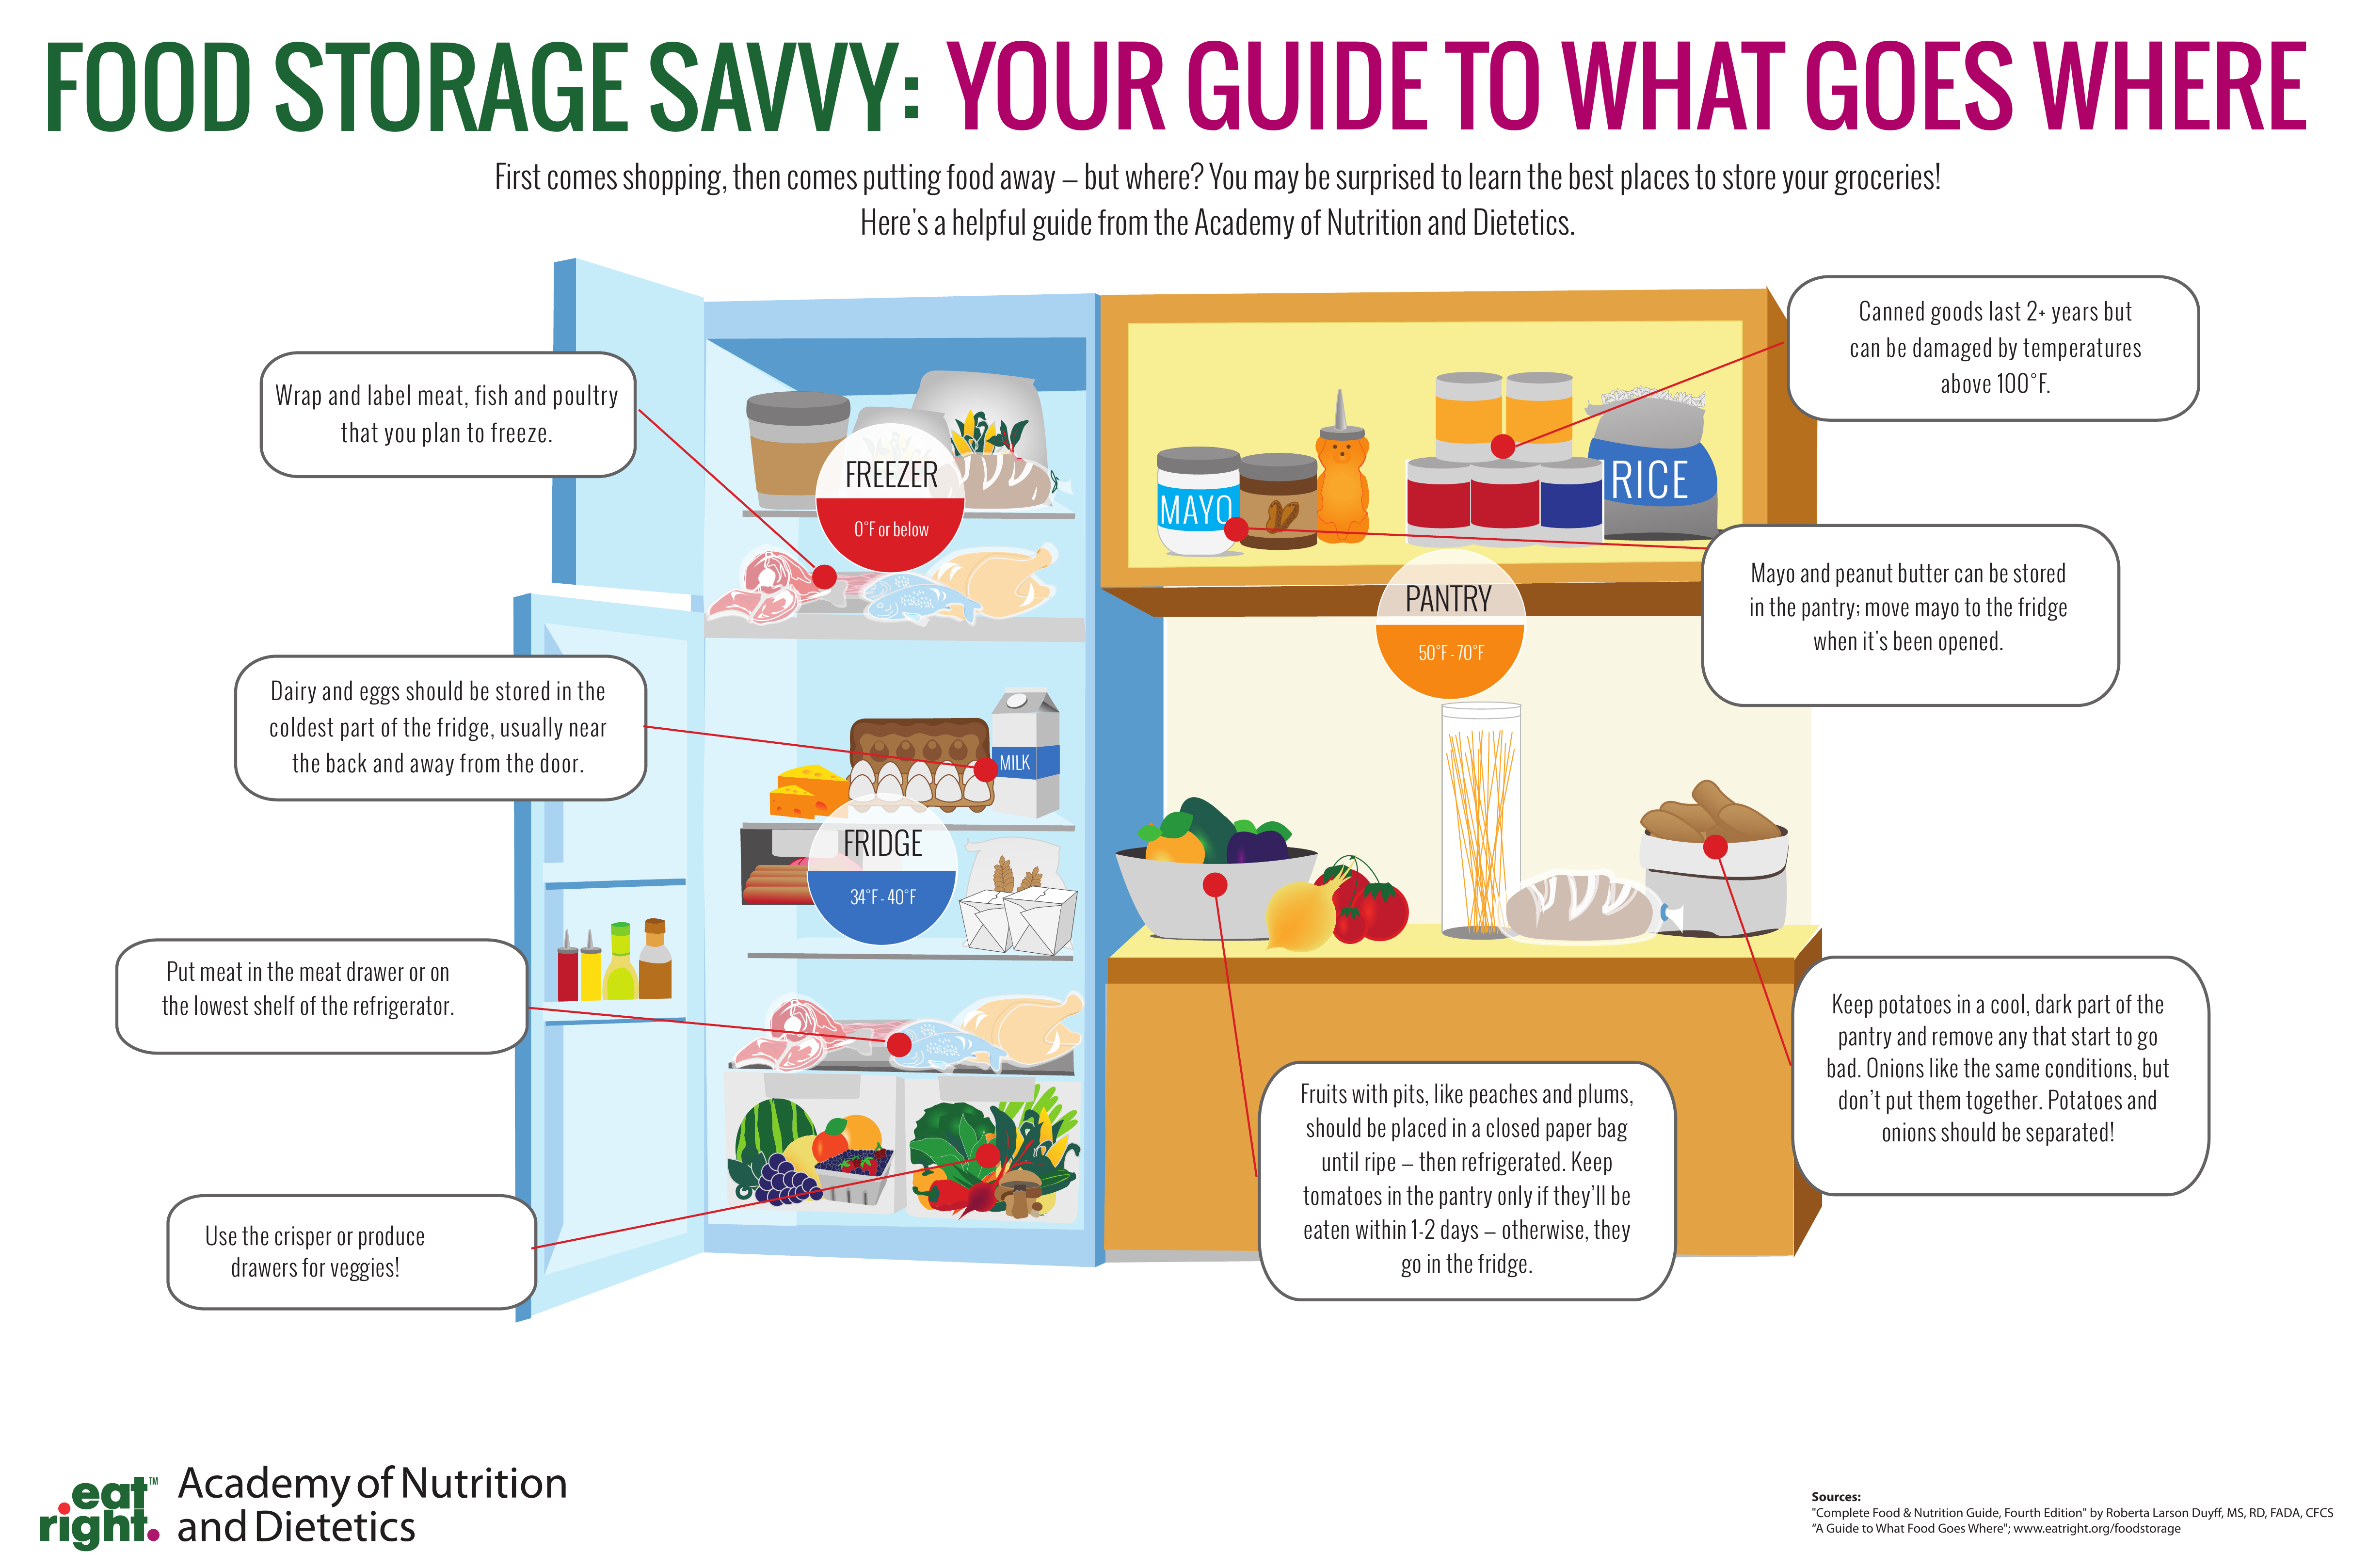 There is some butter in the fridge. Инфографика холодильник. Инфографика питание. Инфографика хранение. Инфографика полезных продуктов.